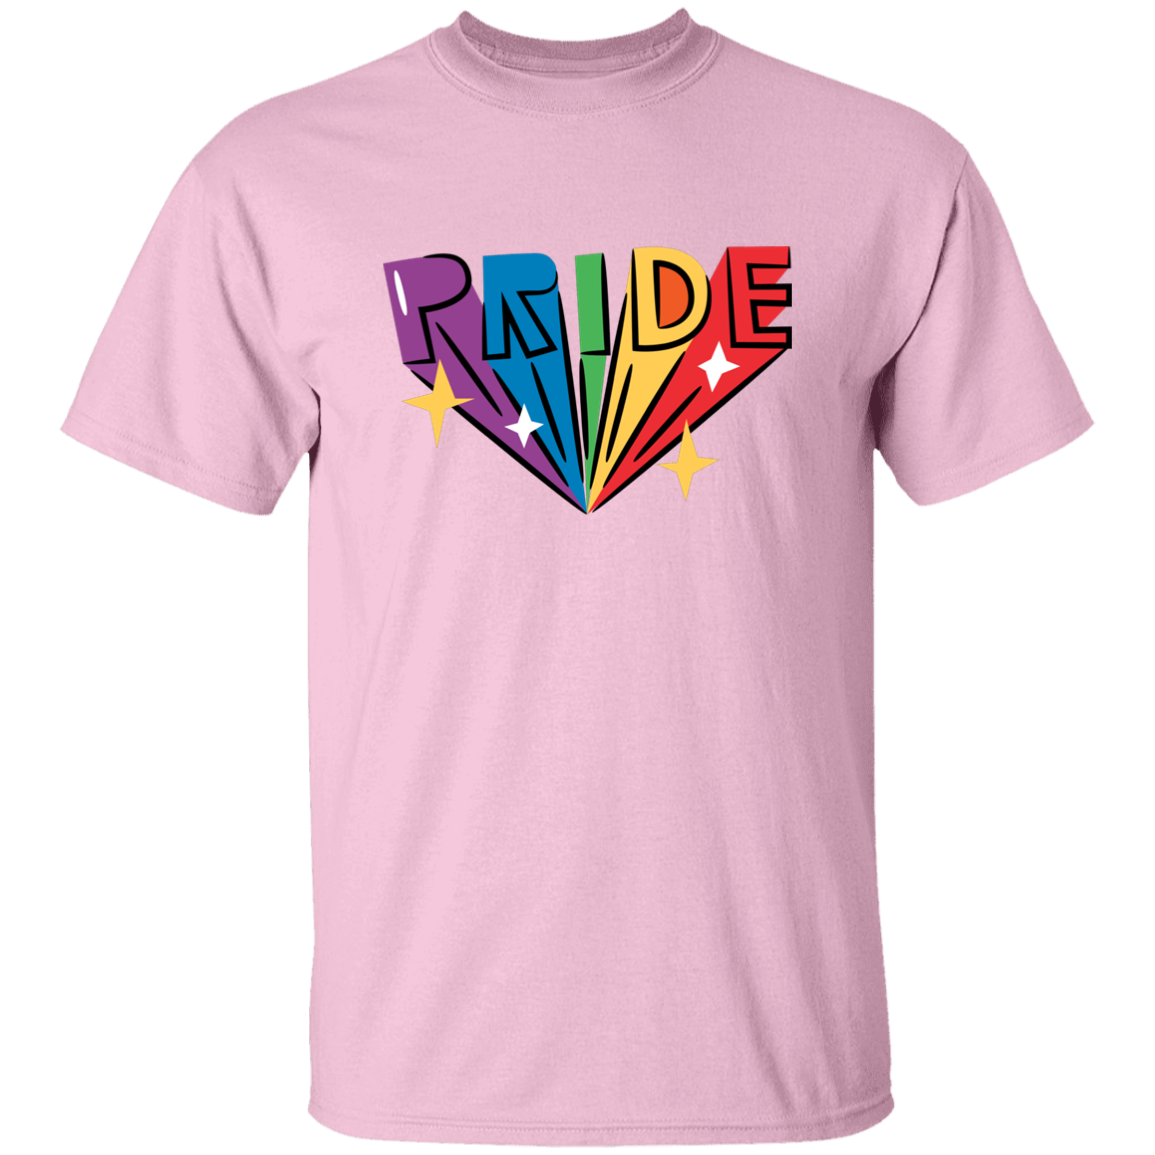 Pride Short Sleeve Shirt